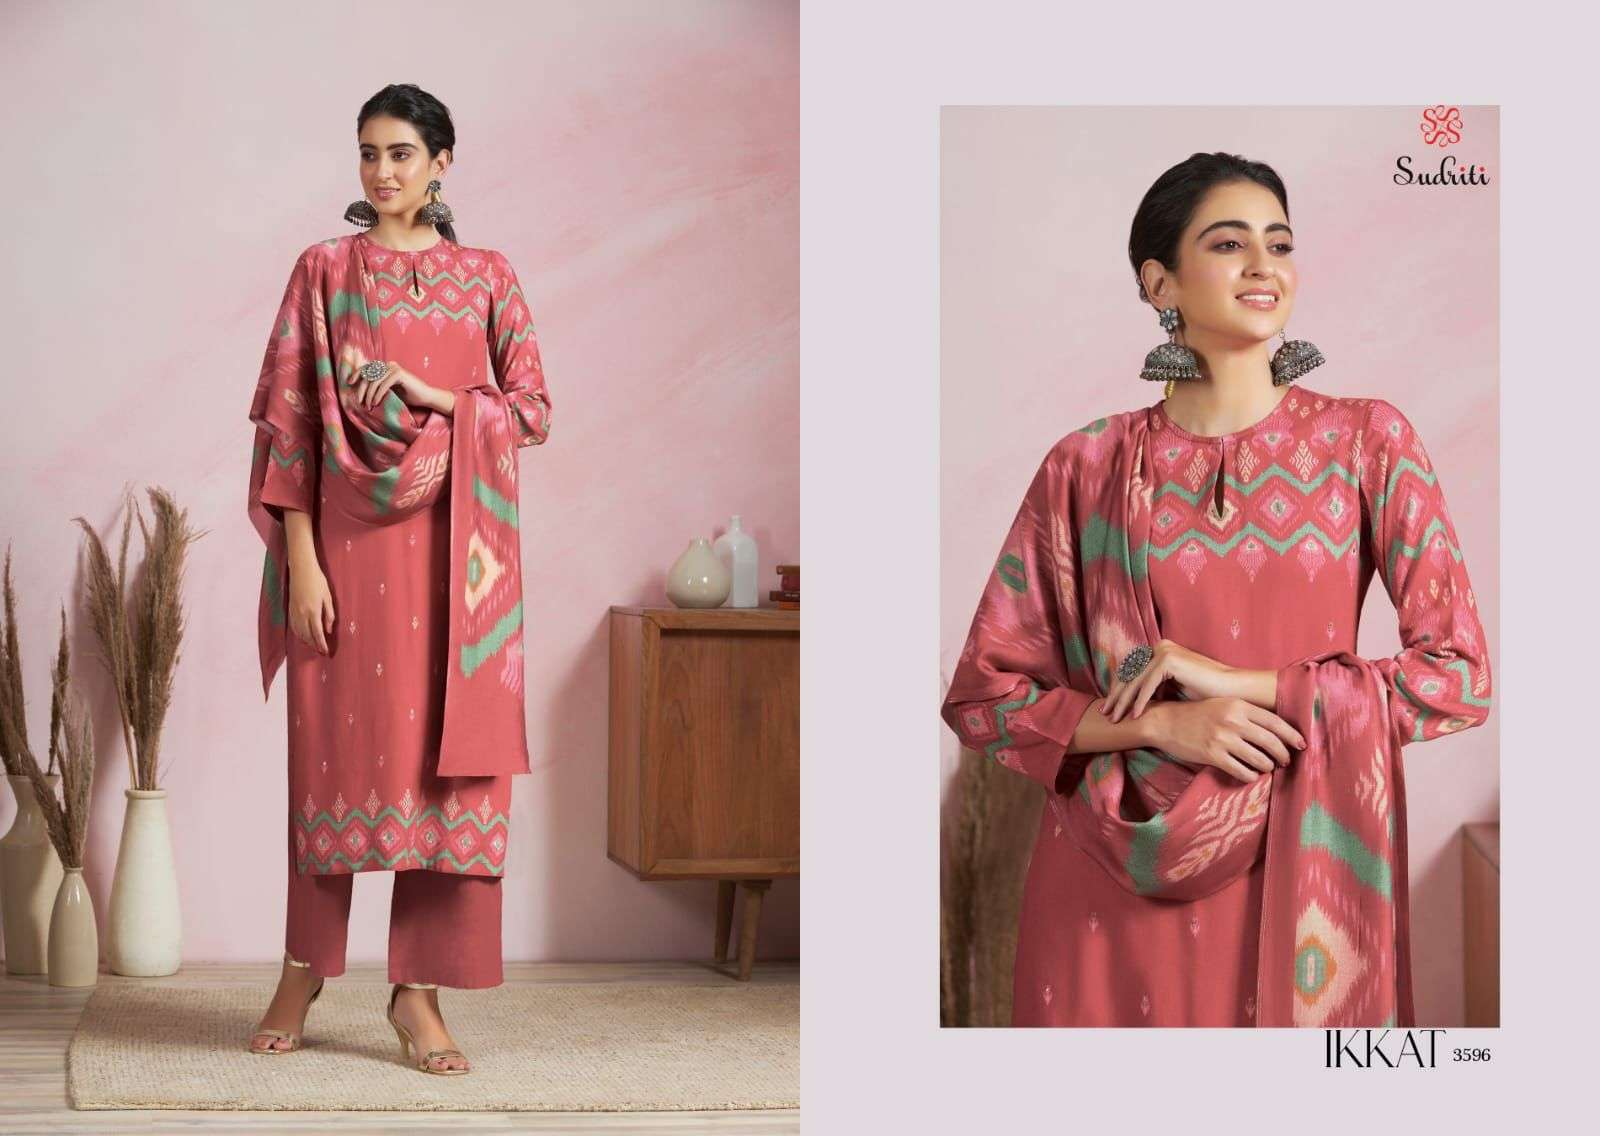 sahiba sudriti ikkat pashmina twill digital printed with work dress material collection surat india